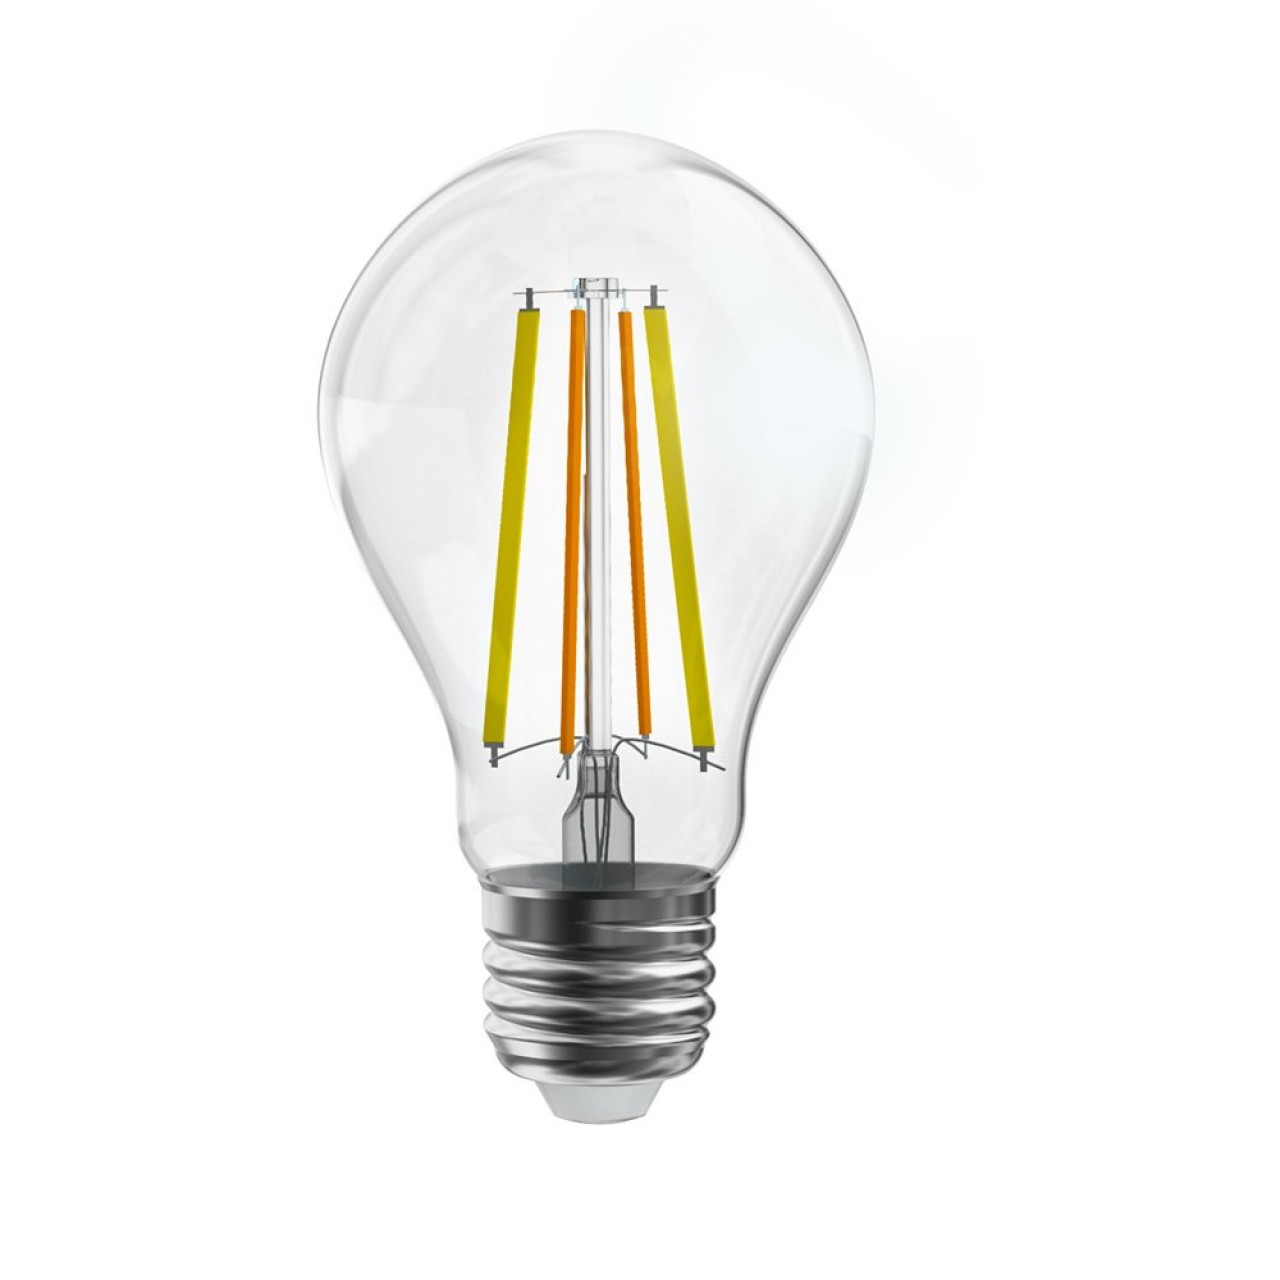 Sonoff Smart Λάμπα LED για Ντουί E27 και Σχήμα A60 Ρυθμιζόμενο Λευκό 806lm Dimmable - 5476